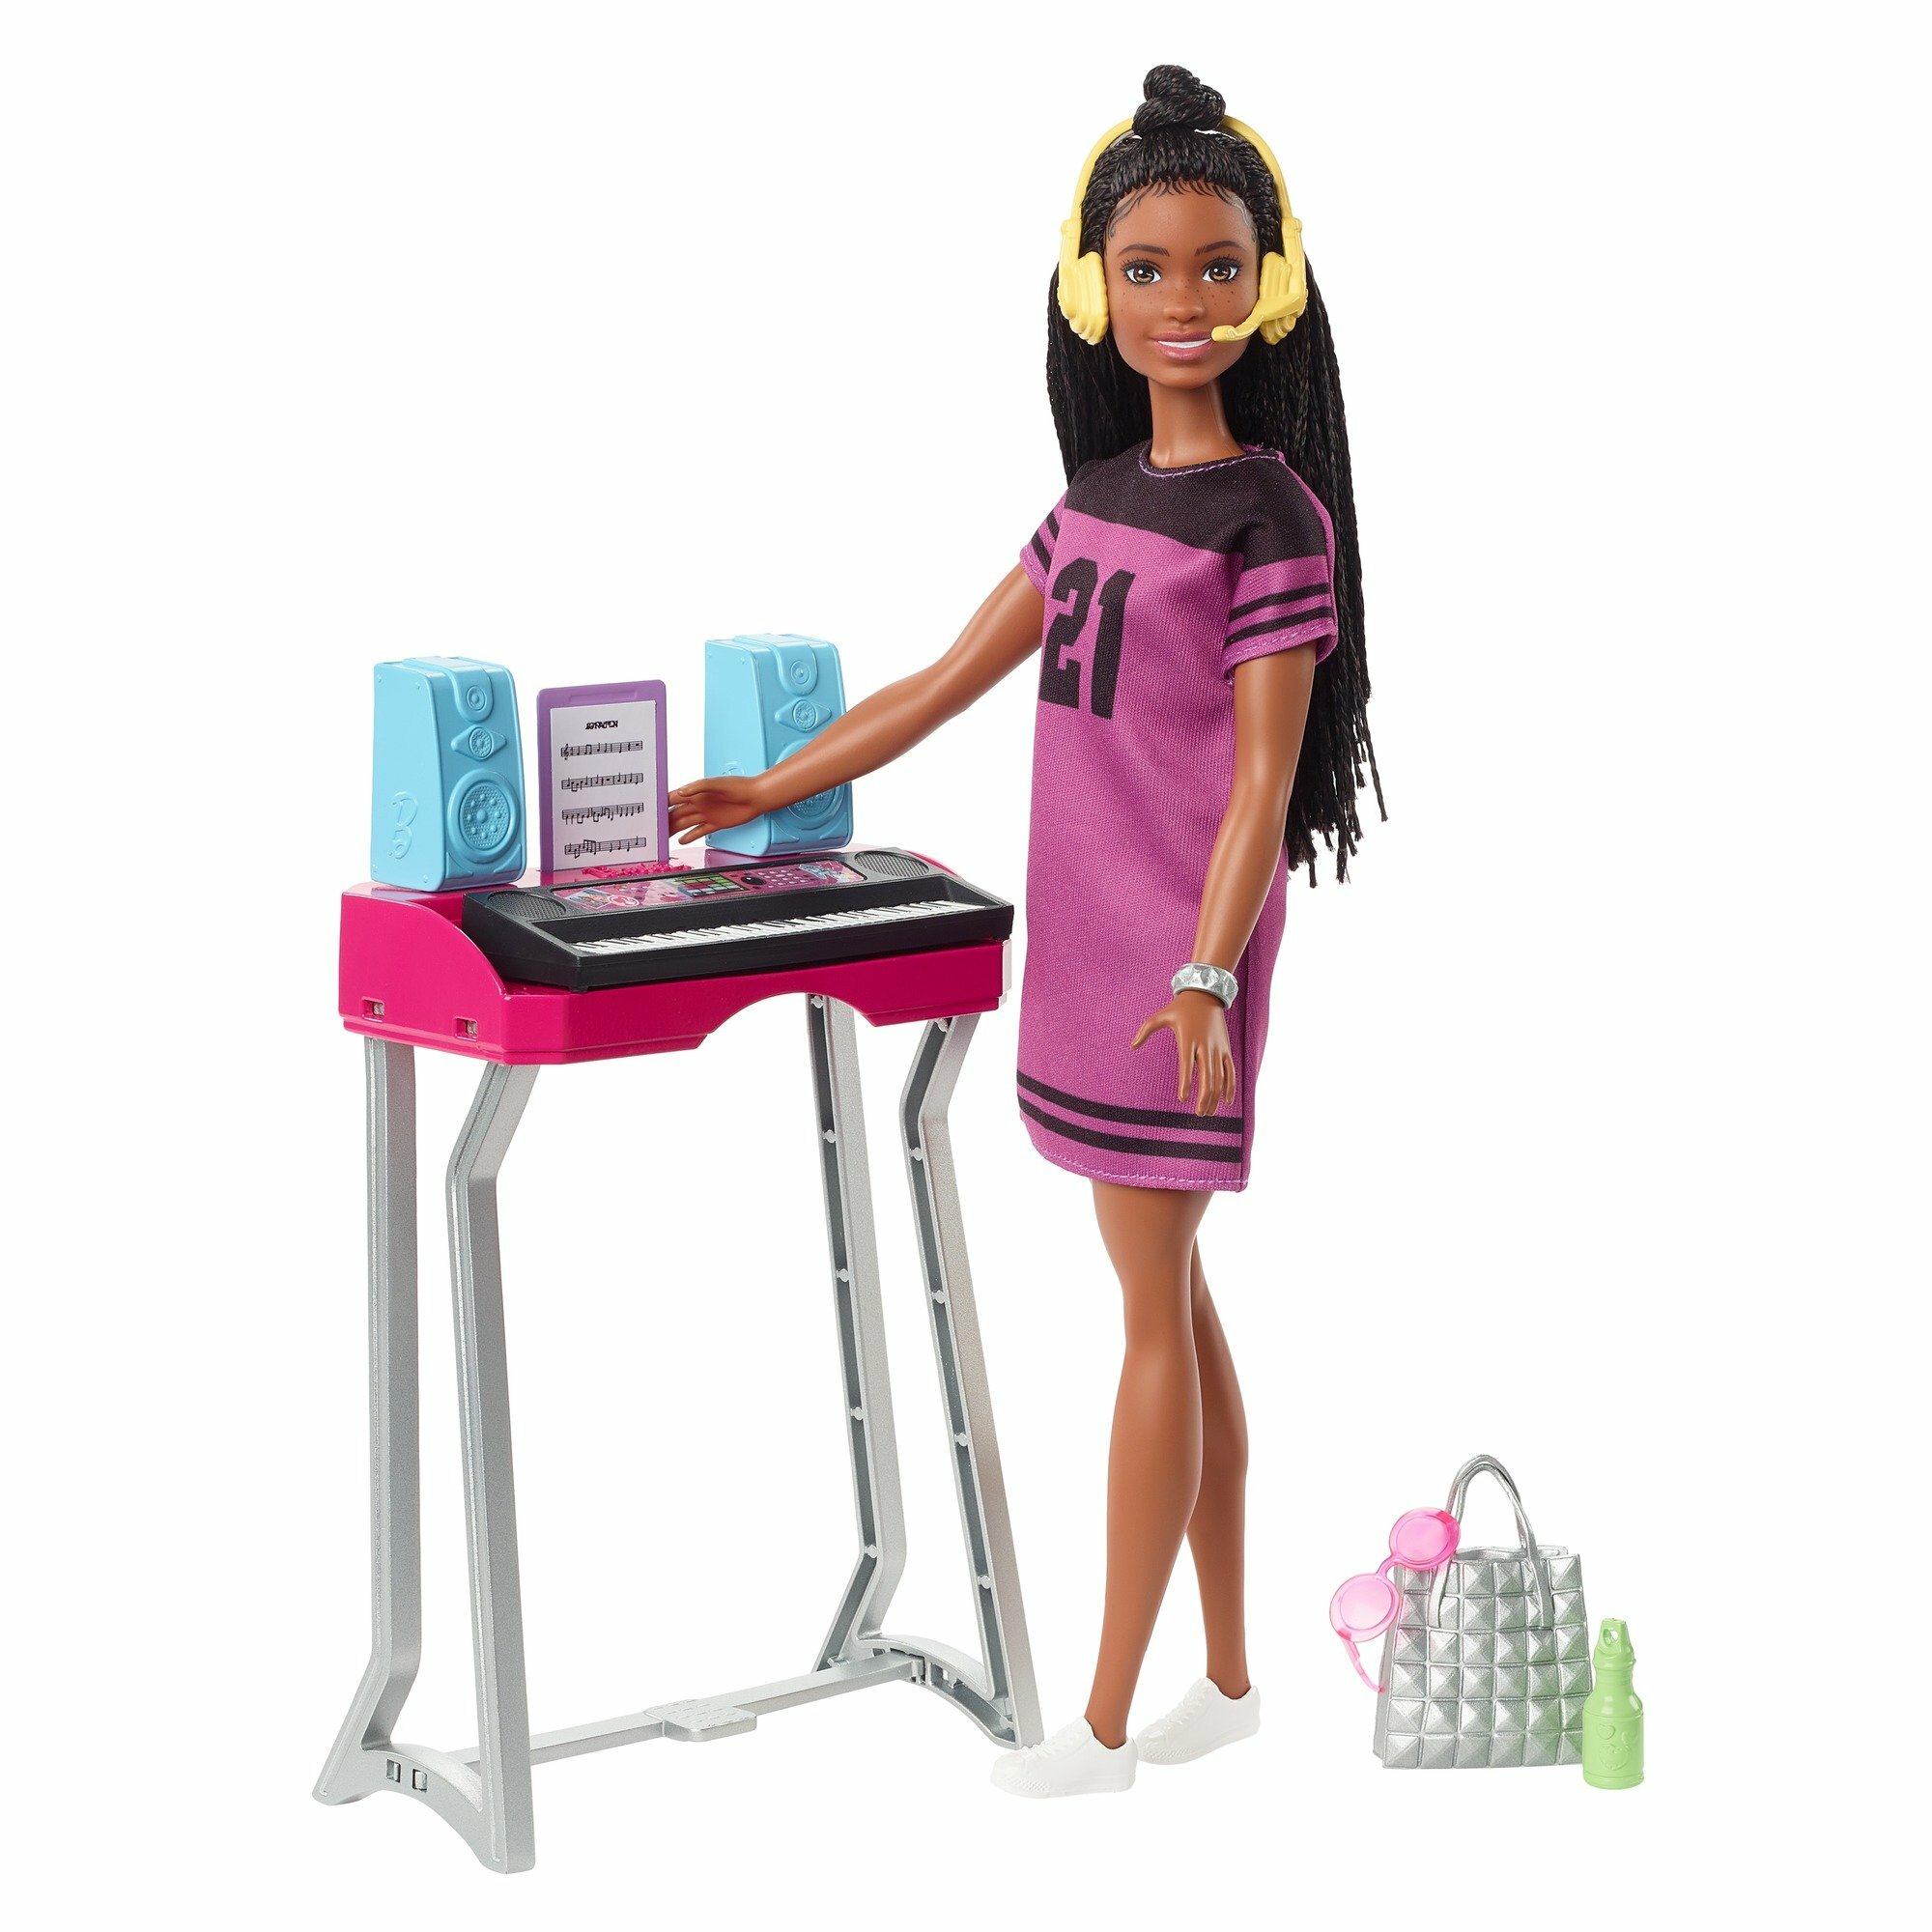 Barbie Игровой набор "Бруклин" с аксессуарами - фото №8